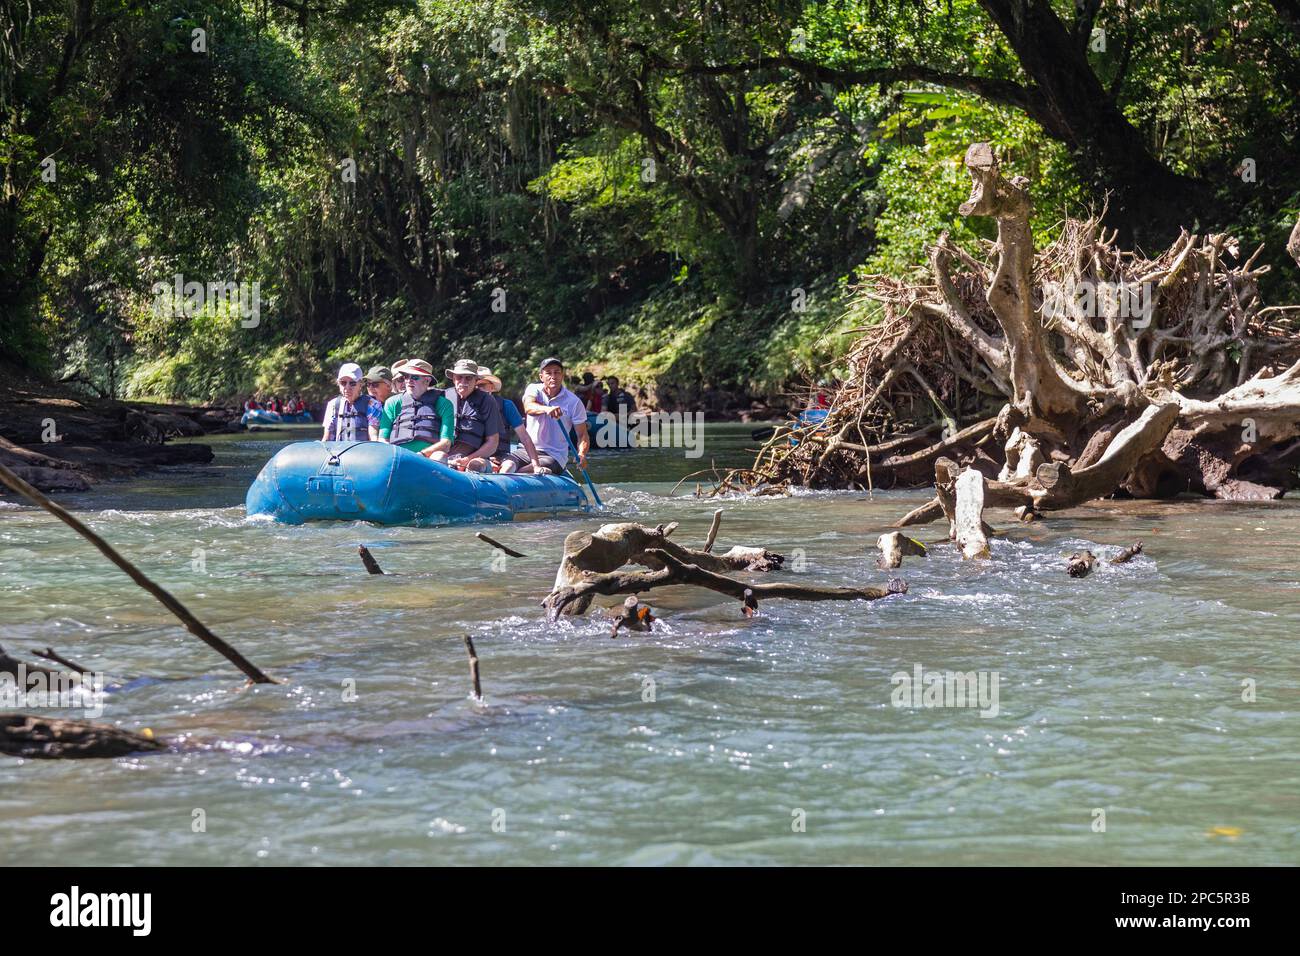 Muelle San Carlos, Costa Rica - turisti in un viaggio panoramico rafting sul Rio Penas Blancas. Foto Stock